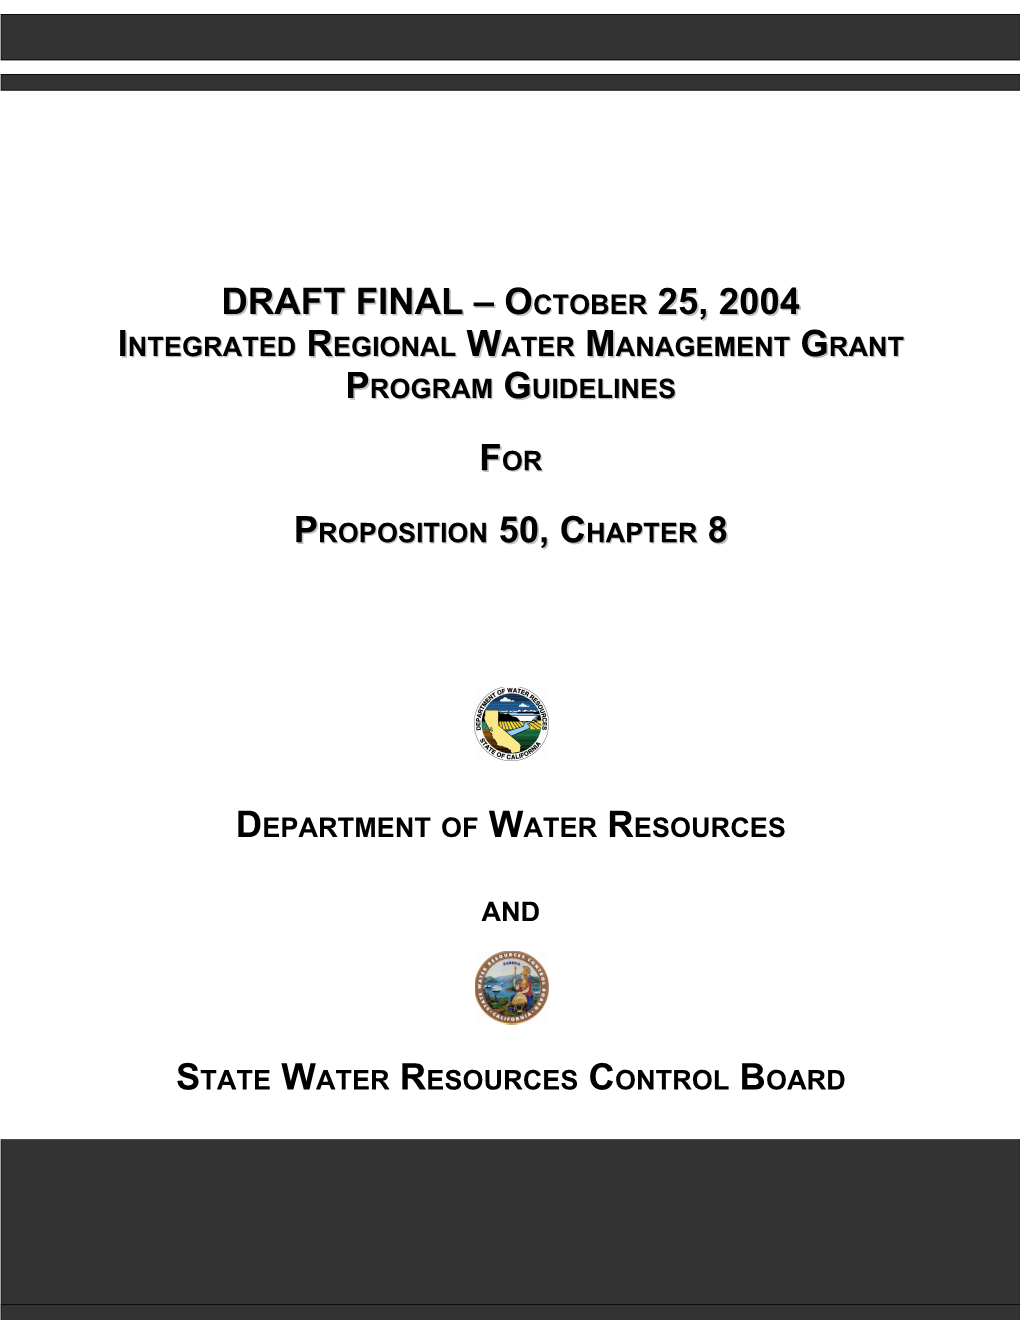 Integrated Regional Water Management Grant Program Guidelines